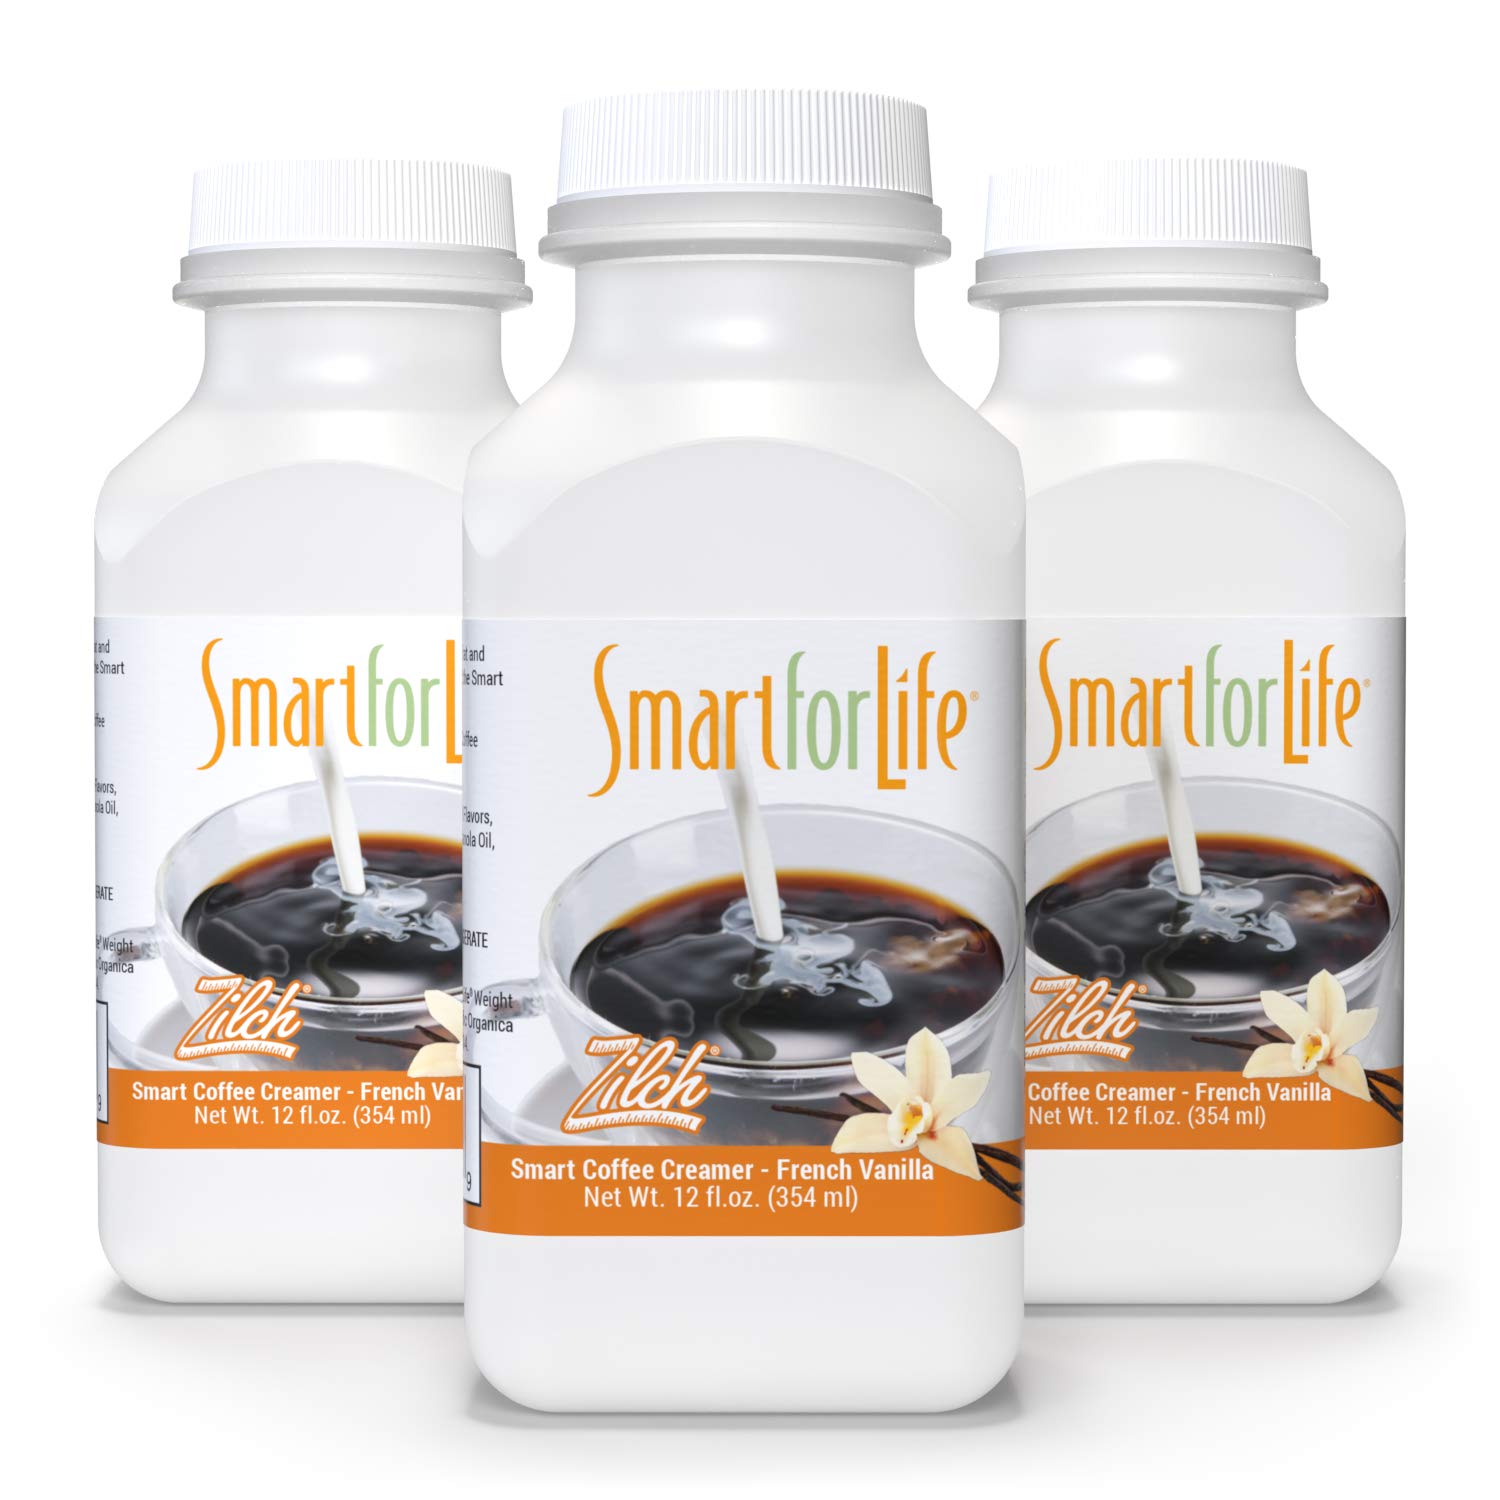 Smart for Life Zero Calorie Coffee Creamer - Guilt Free Zero Carb Sugar Free Creamer Sweetener - Zilch Creamer - French Vanilla Flavor -12 Ounce - 3 Pack